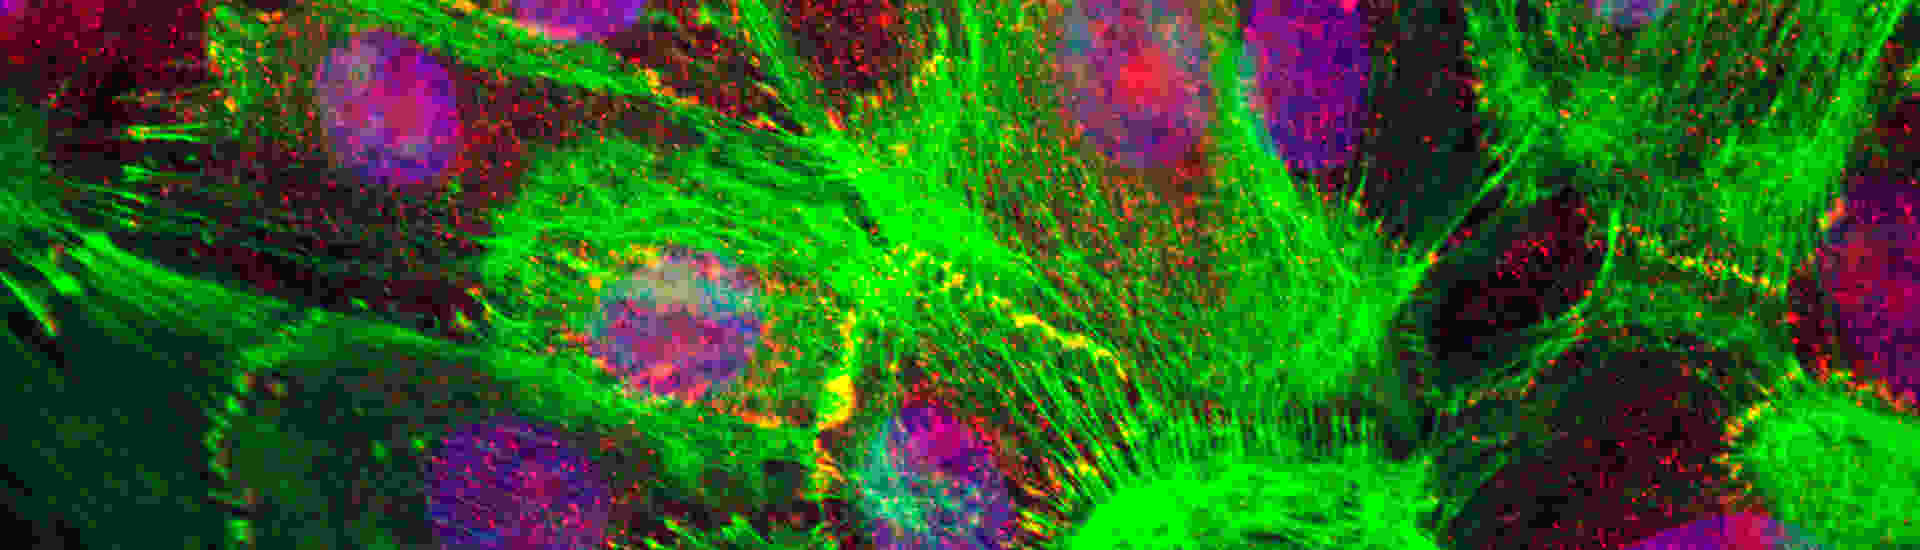 bmb research hero fluorescent cells image.jpg